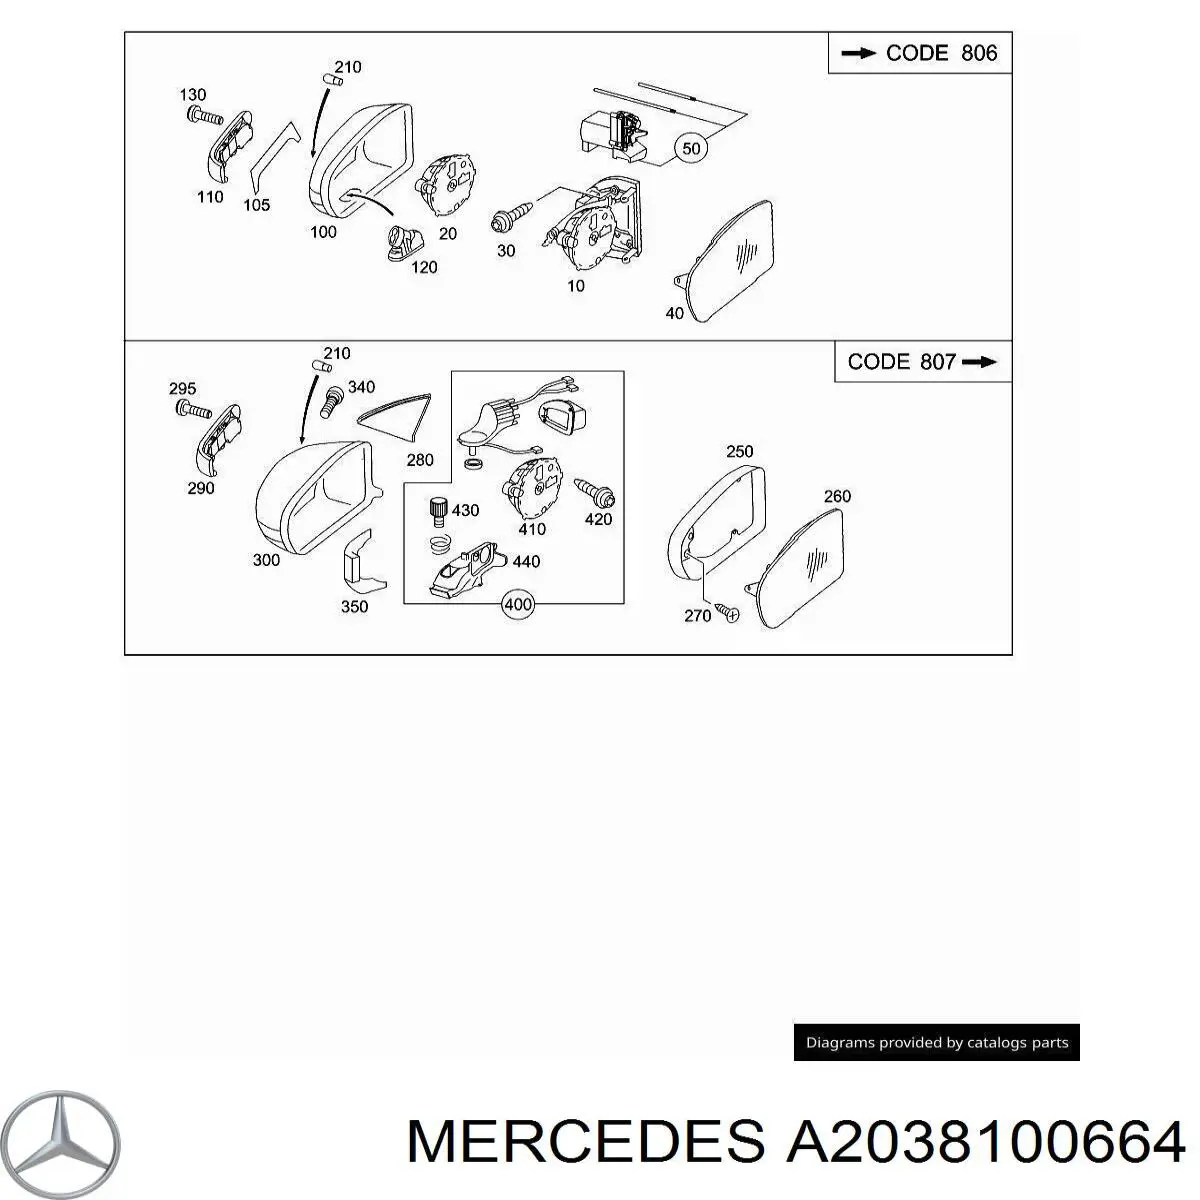 A2038100664 Mercedes cubierta de espejo retrovisor derecho